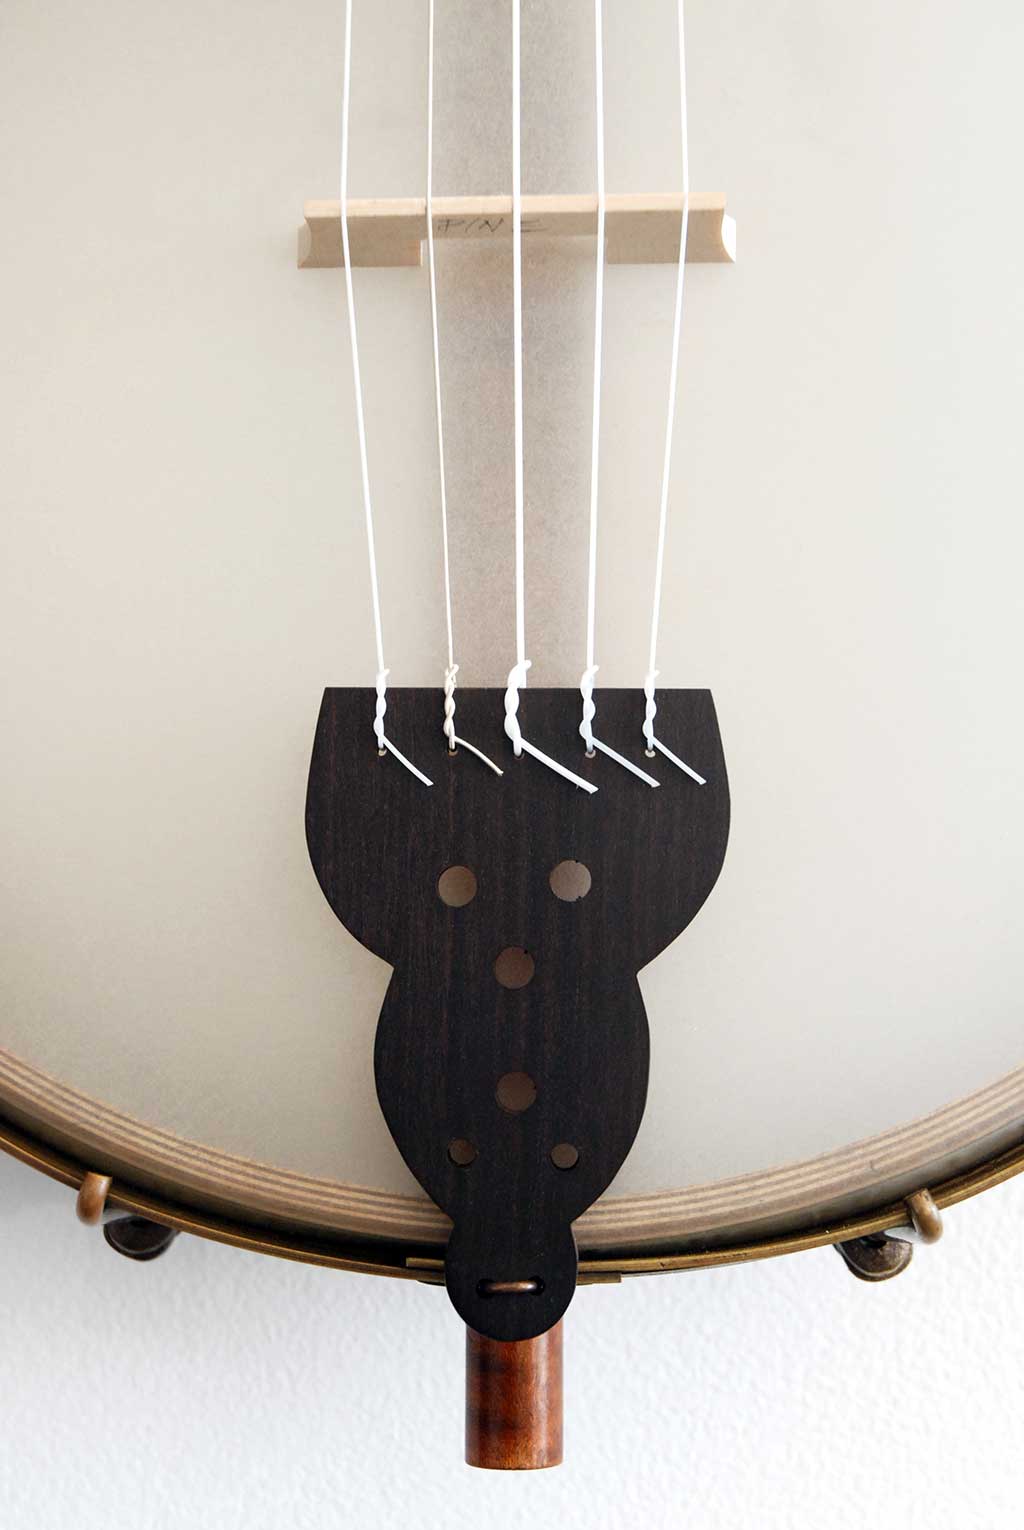 James J. Hartel, Levi Brown Minstrel Banjo Reproduction (detail), 2015